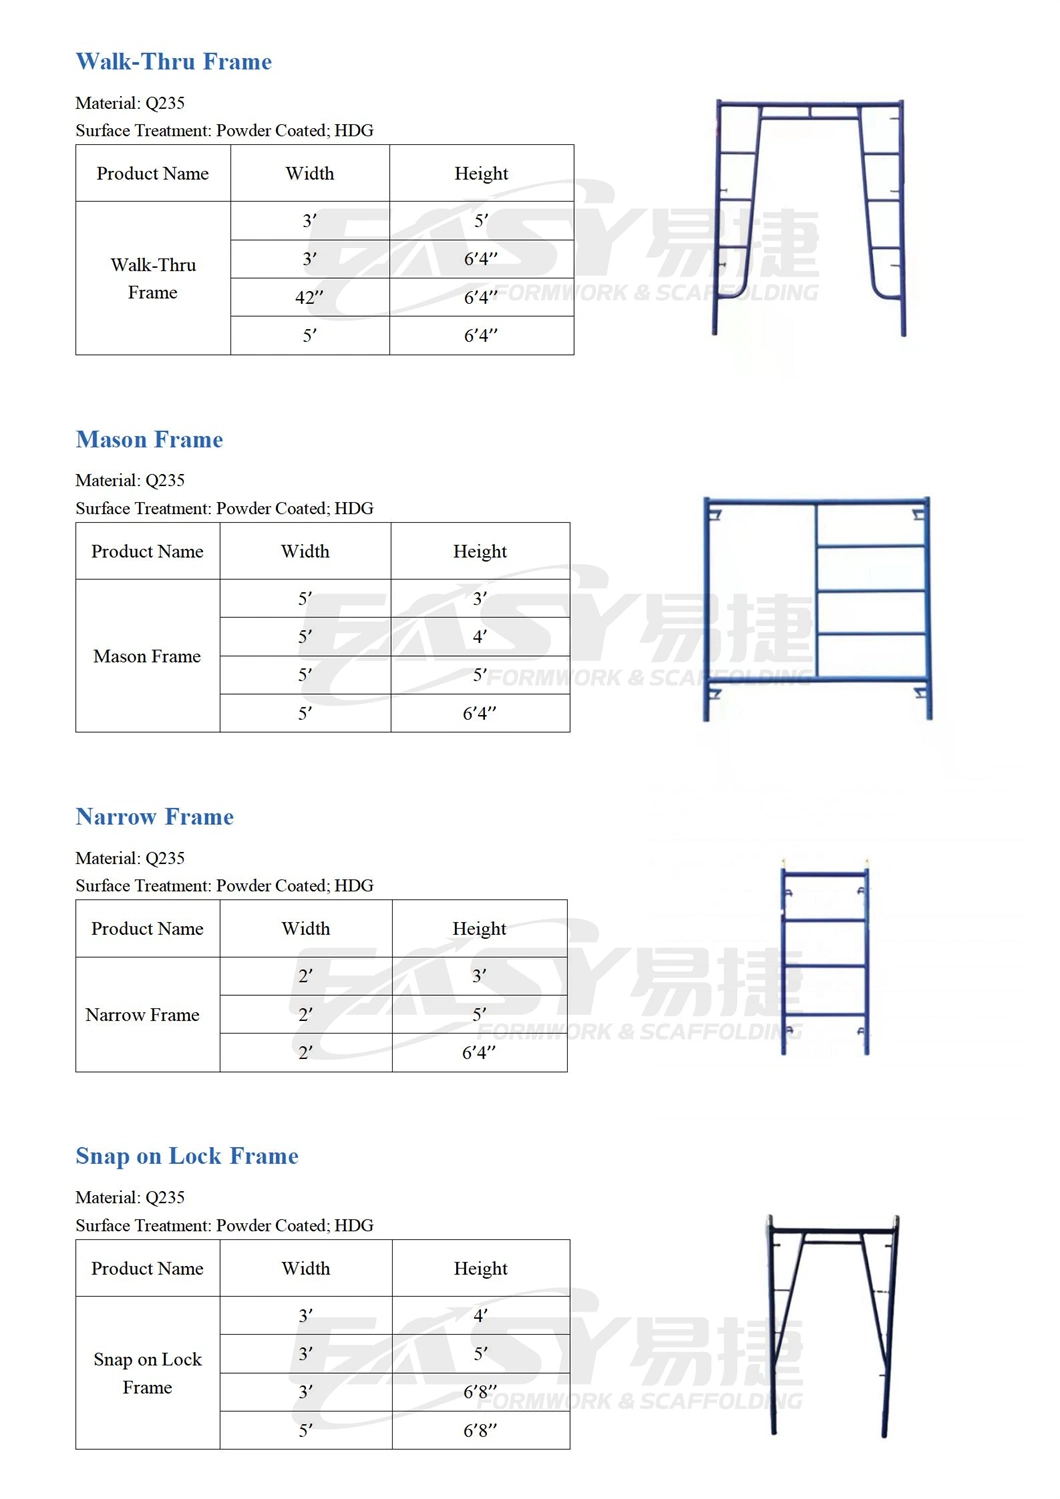 Easy Scaffolding Wholesale Shoring Frames Scaffold Price Steel Mason/Narrow/Ladder/Snap /Folding/Walk Through Frame Modular System Scaffolding for Sale